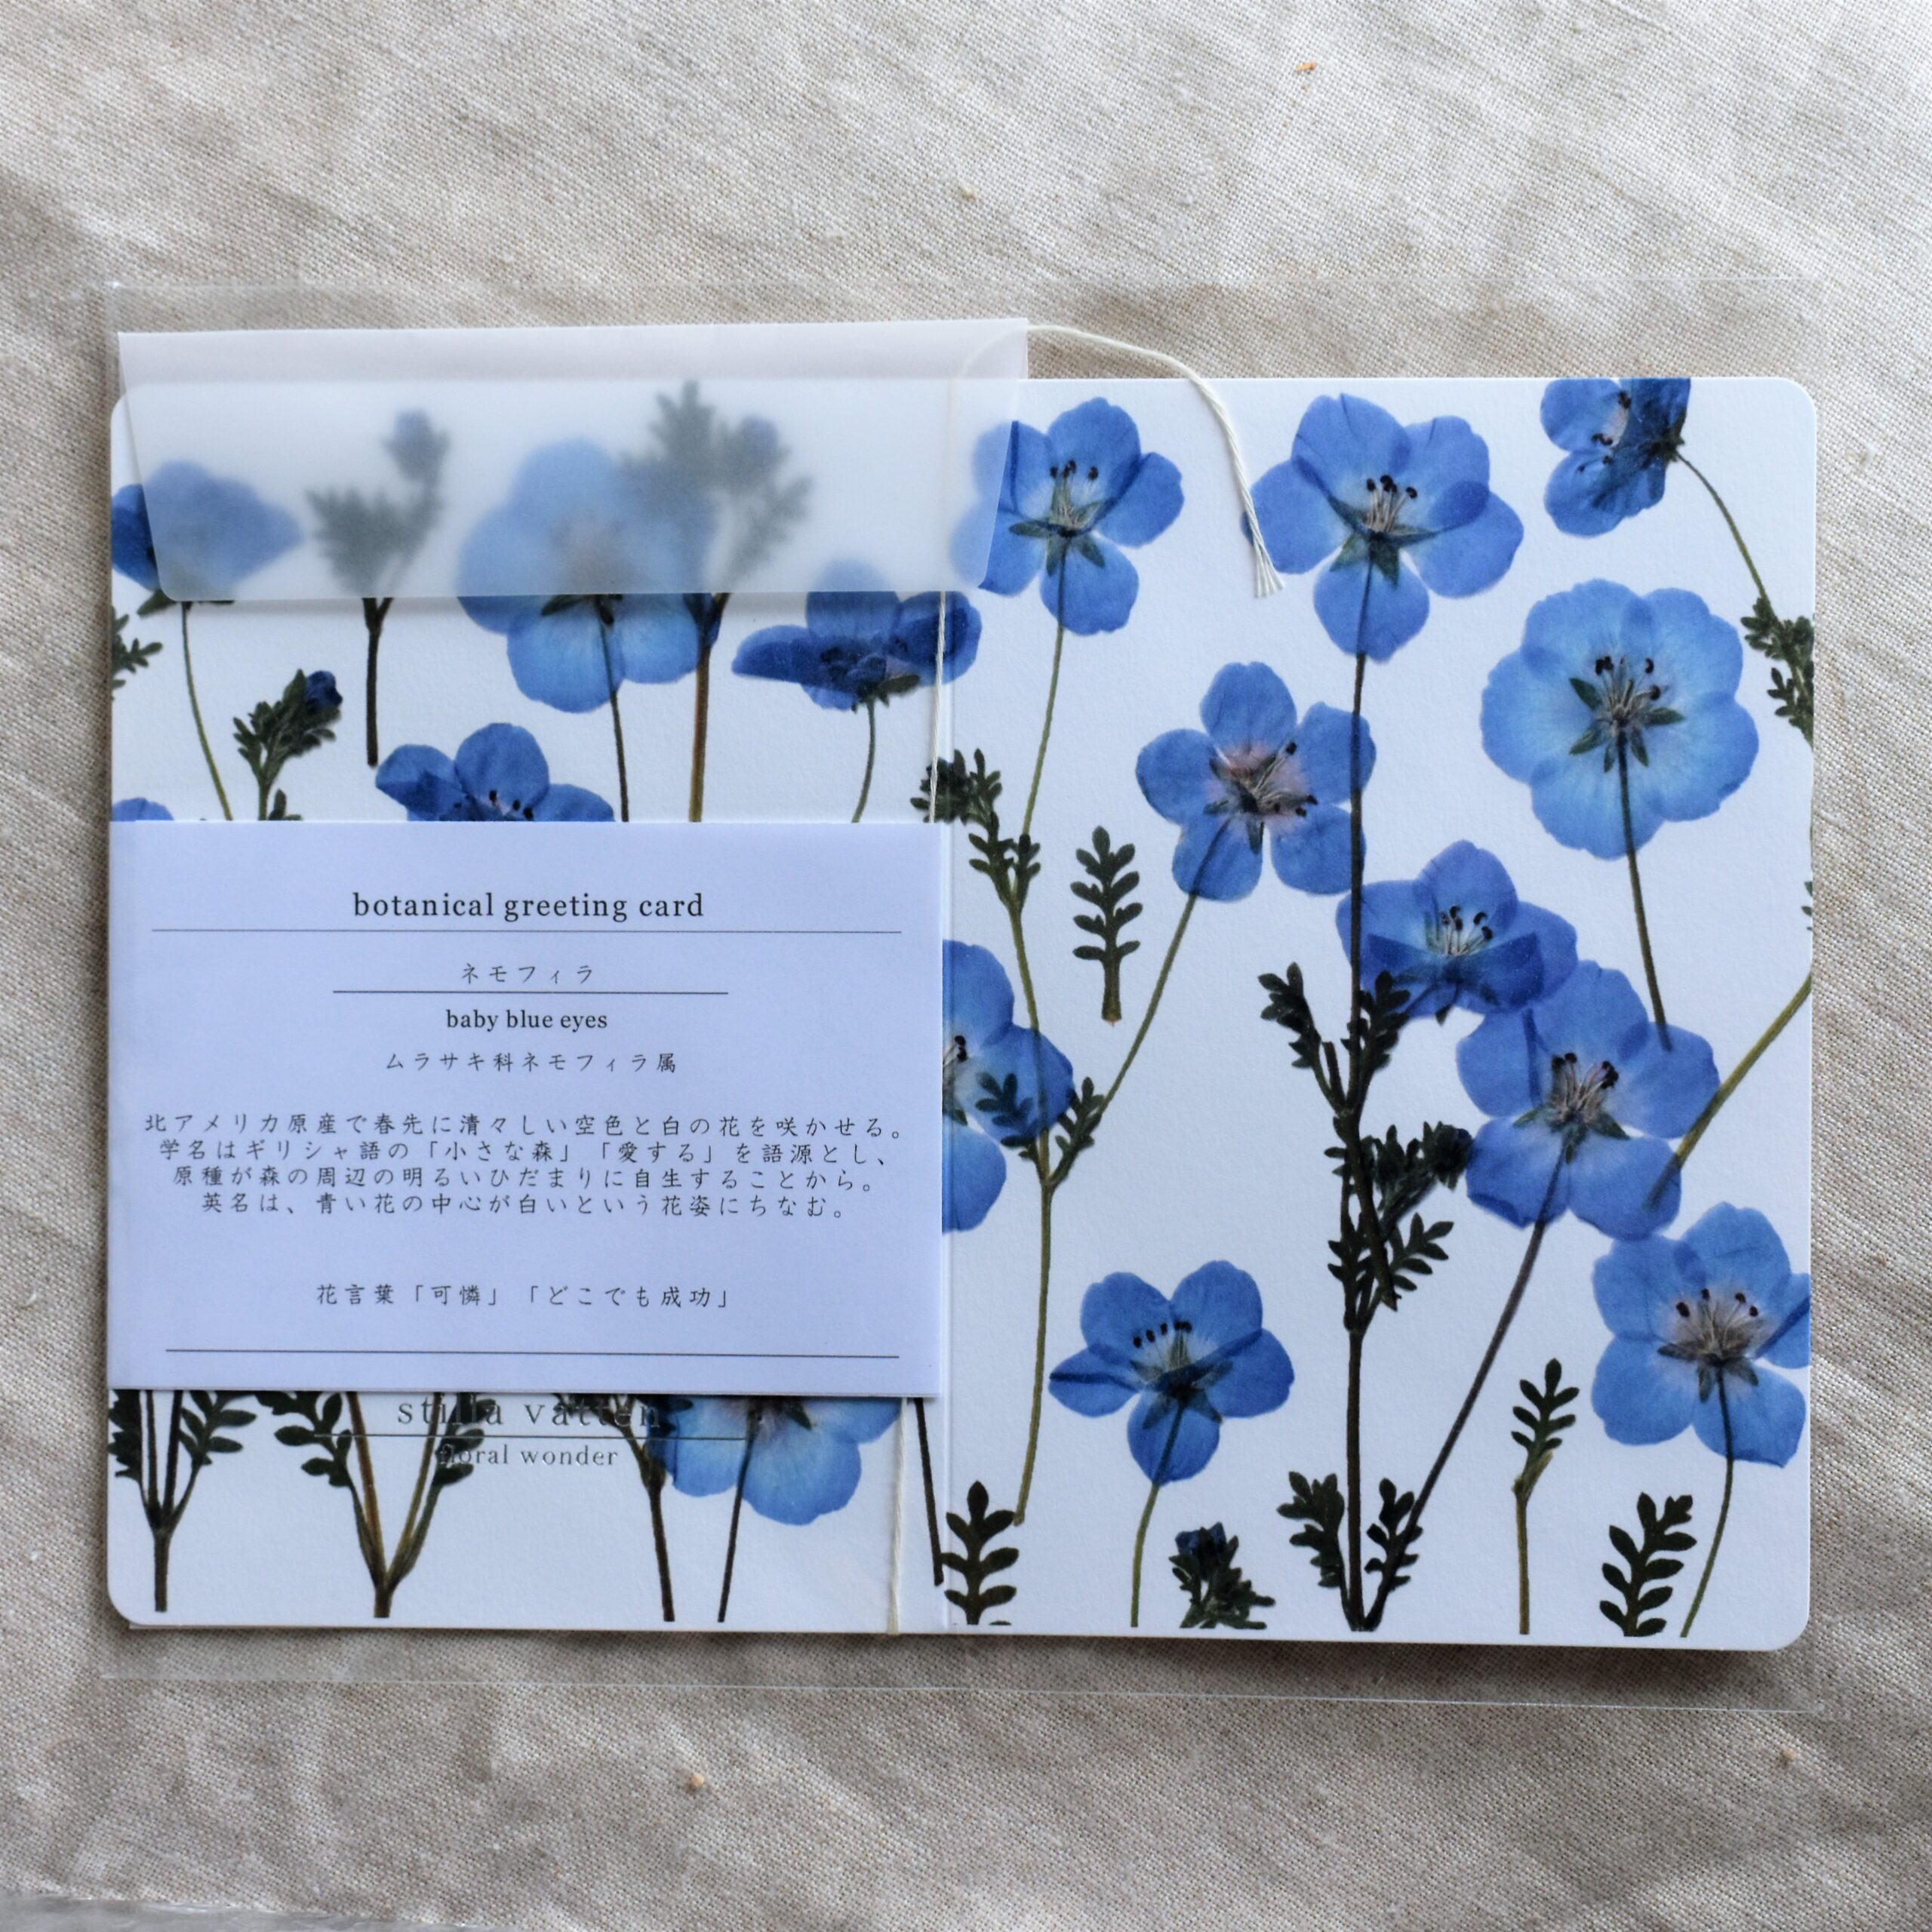 botanical greeting card | stilla vatten｜floral wonder